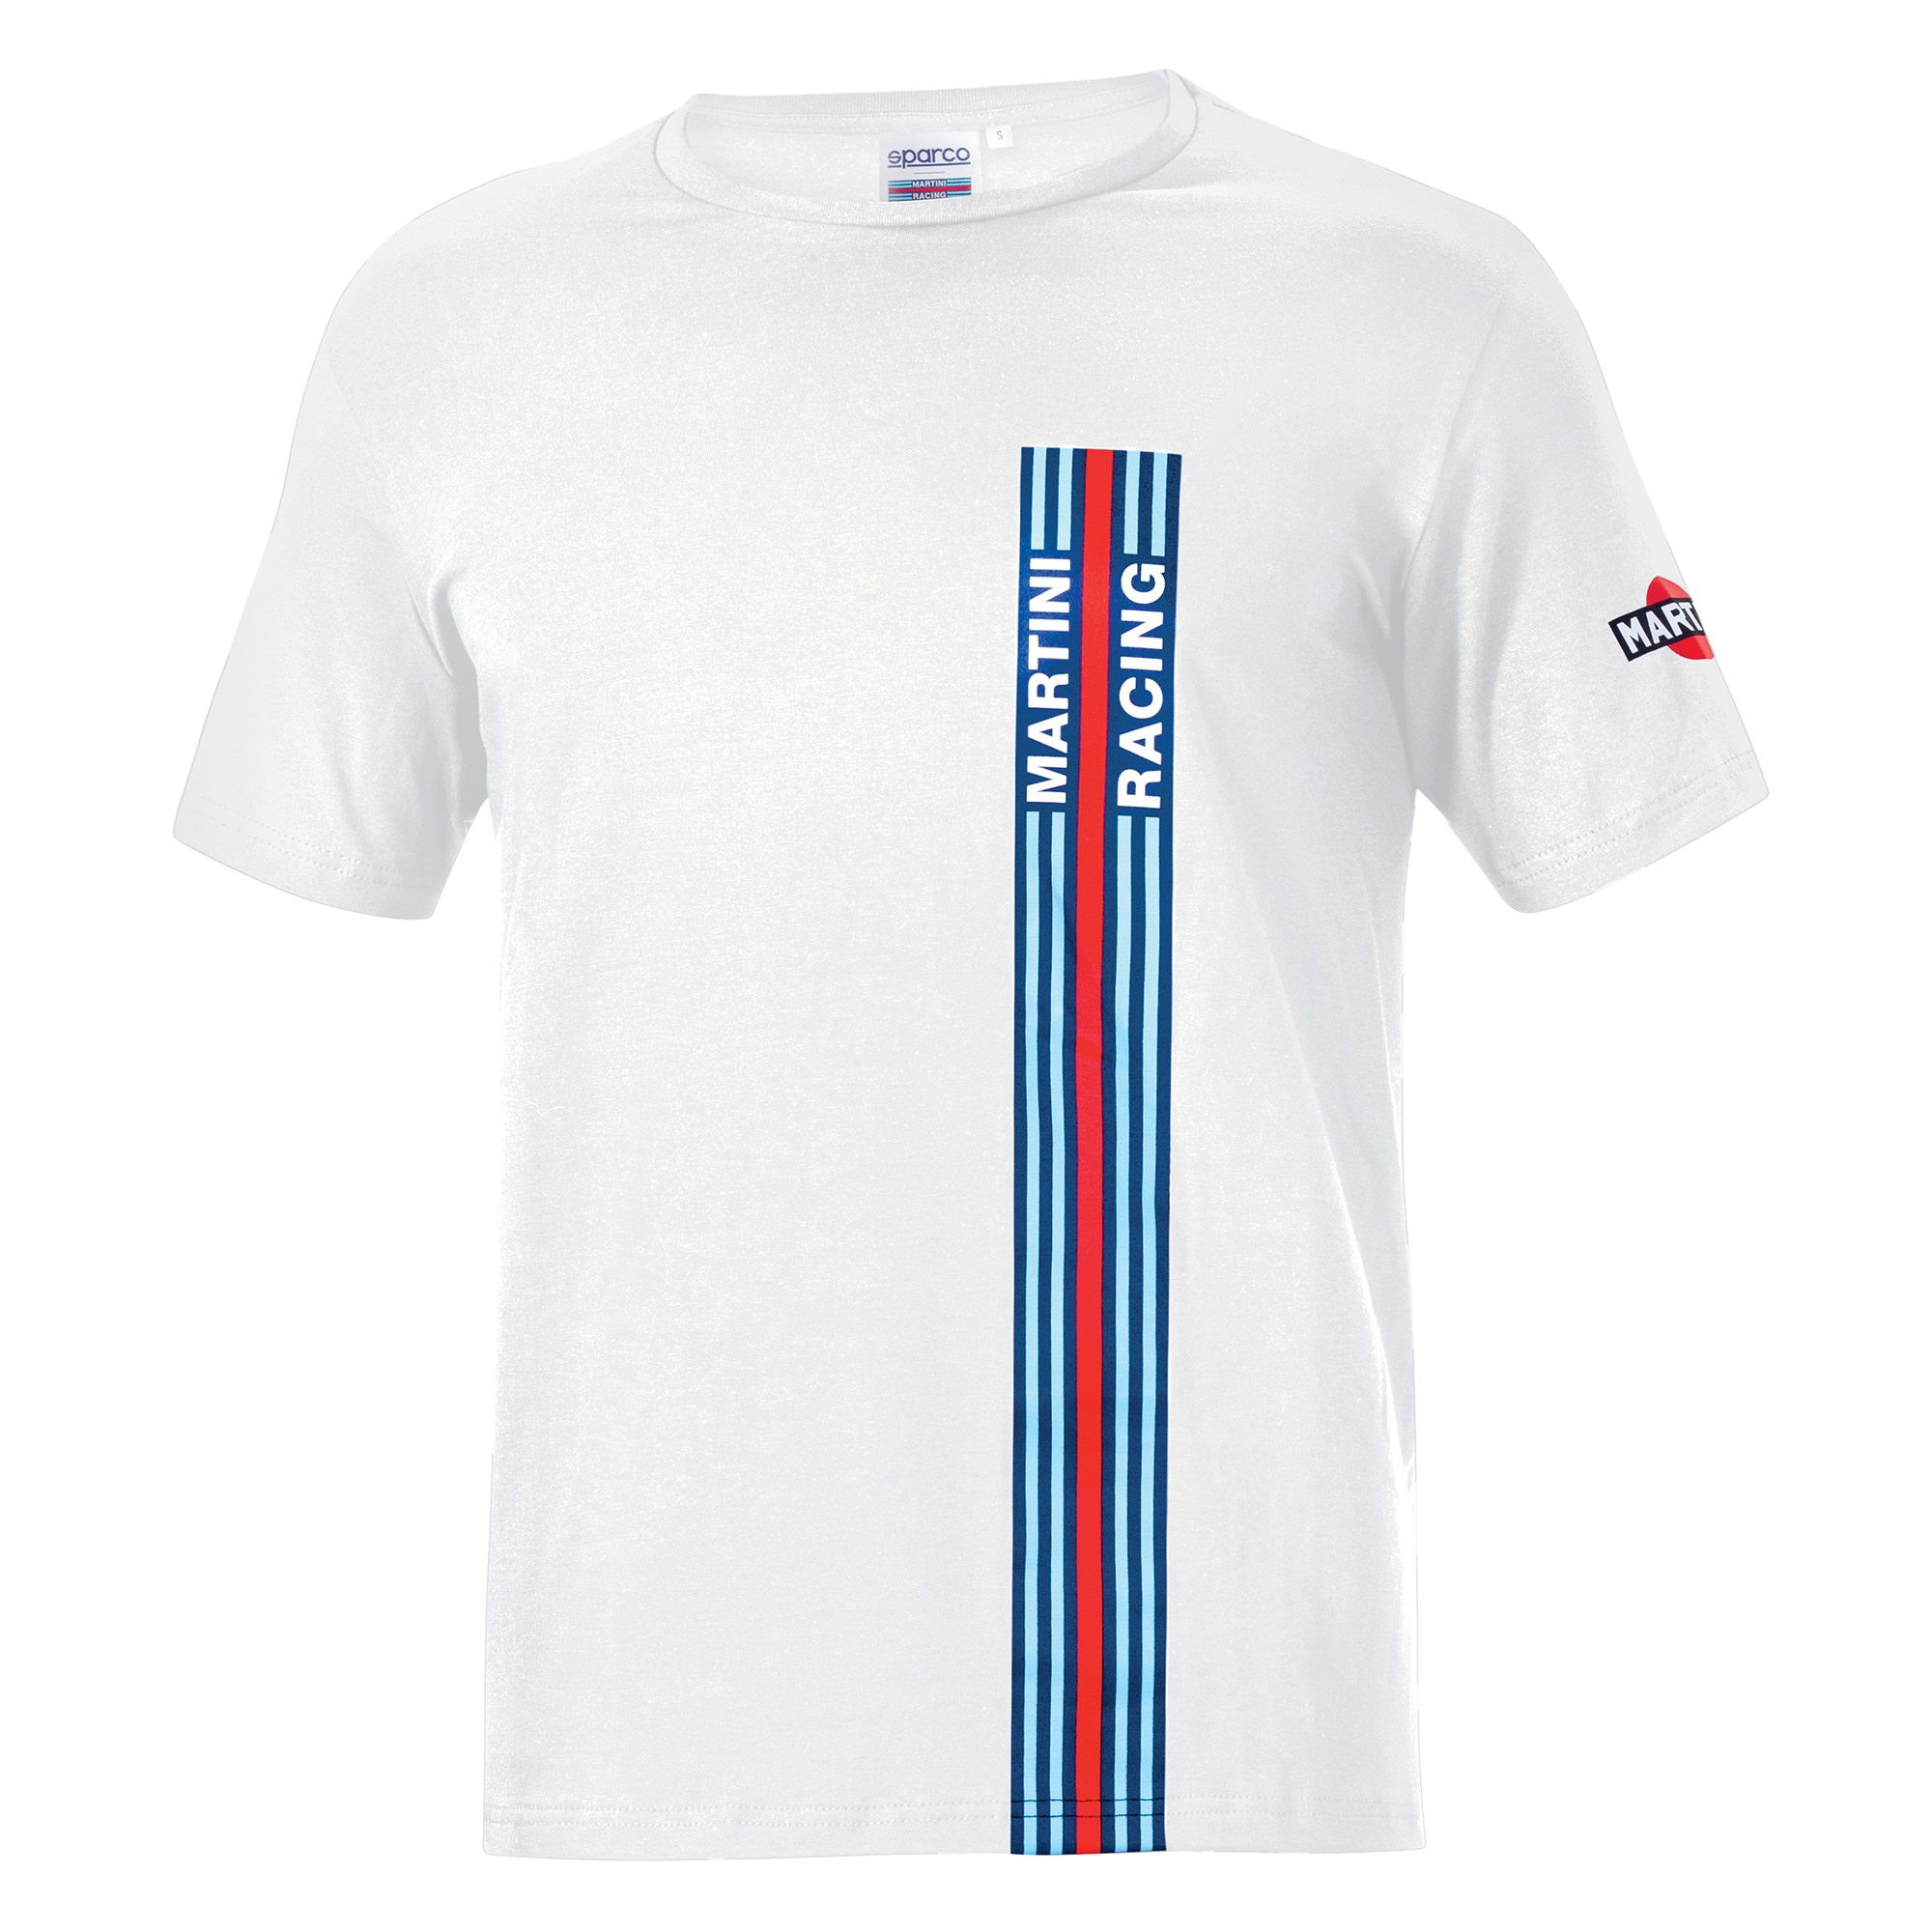 Sparco Martini Racing Big Stripes T-Shirt Tee Motorsport Leisurewear